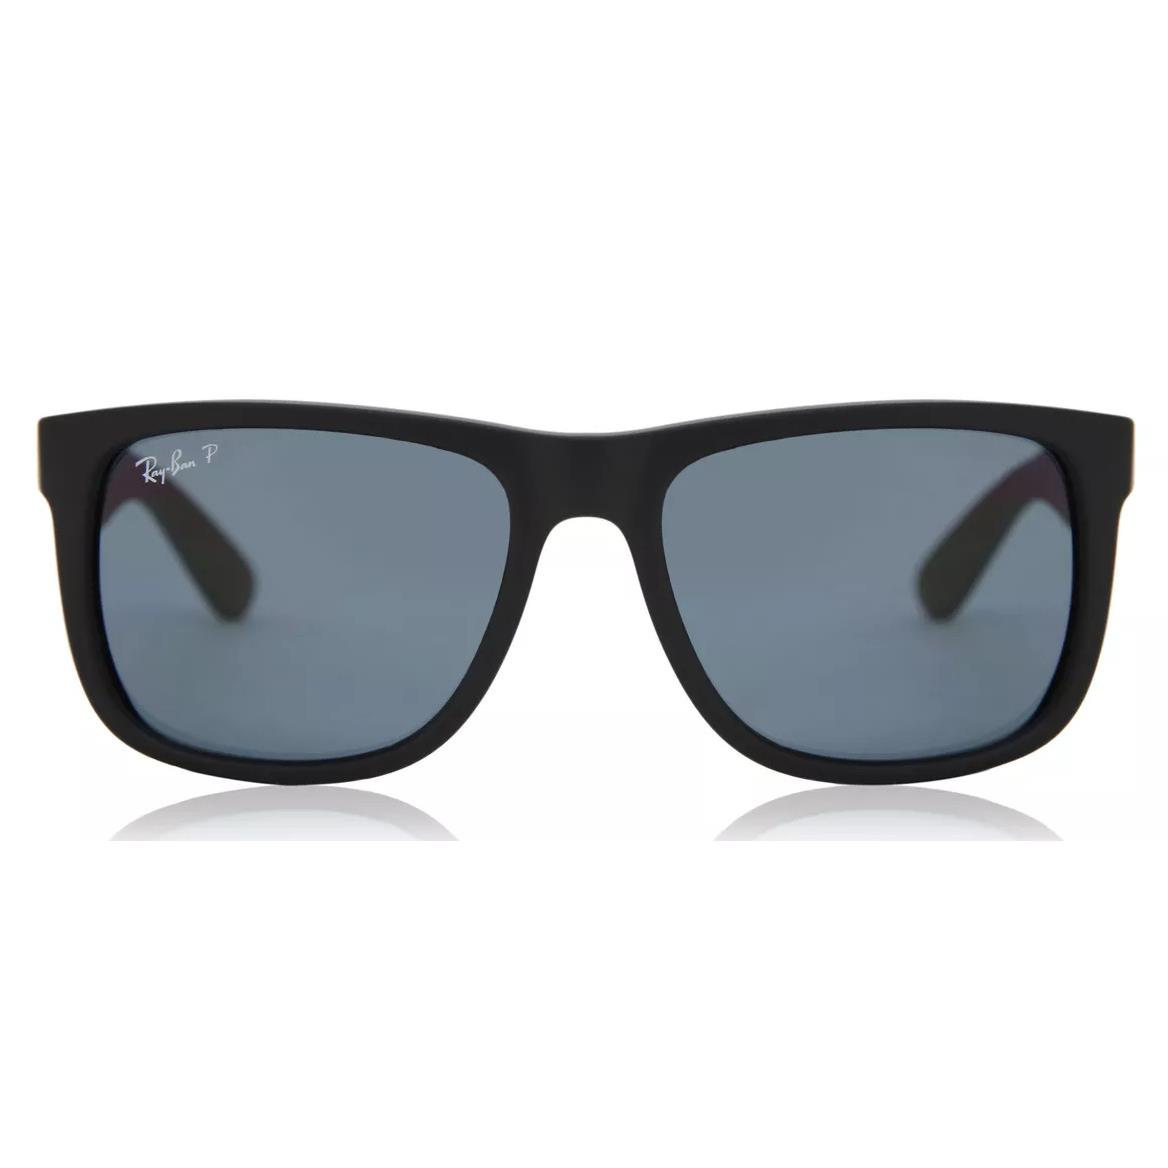 Ray-ban Justin Polarized Blue Classic Black Frame Sunglasses RB4165 622/2V 55 - Frame: Black, Lens: Blue